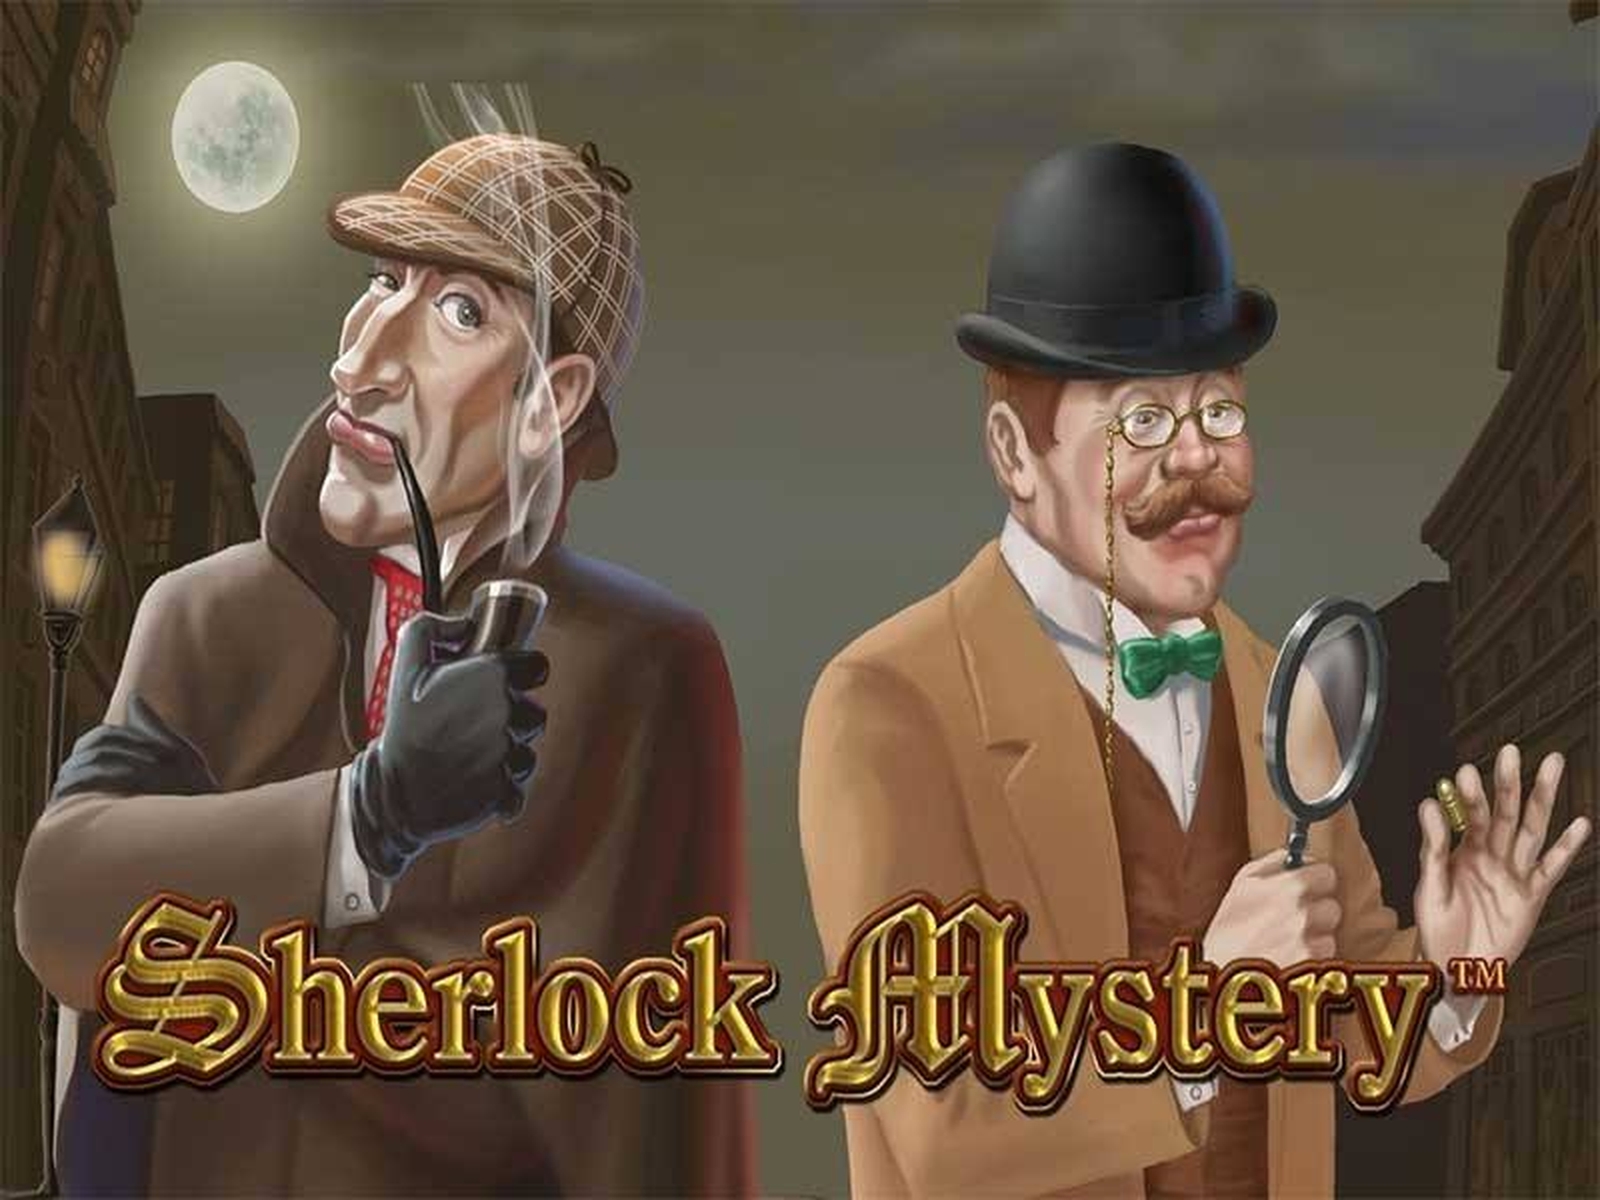 Sherlock Mystery demo